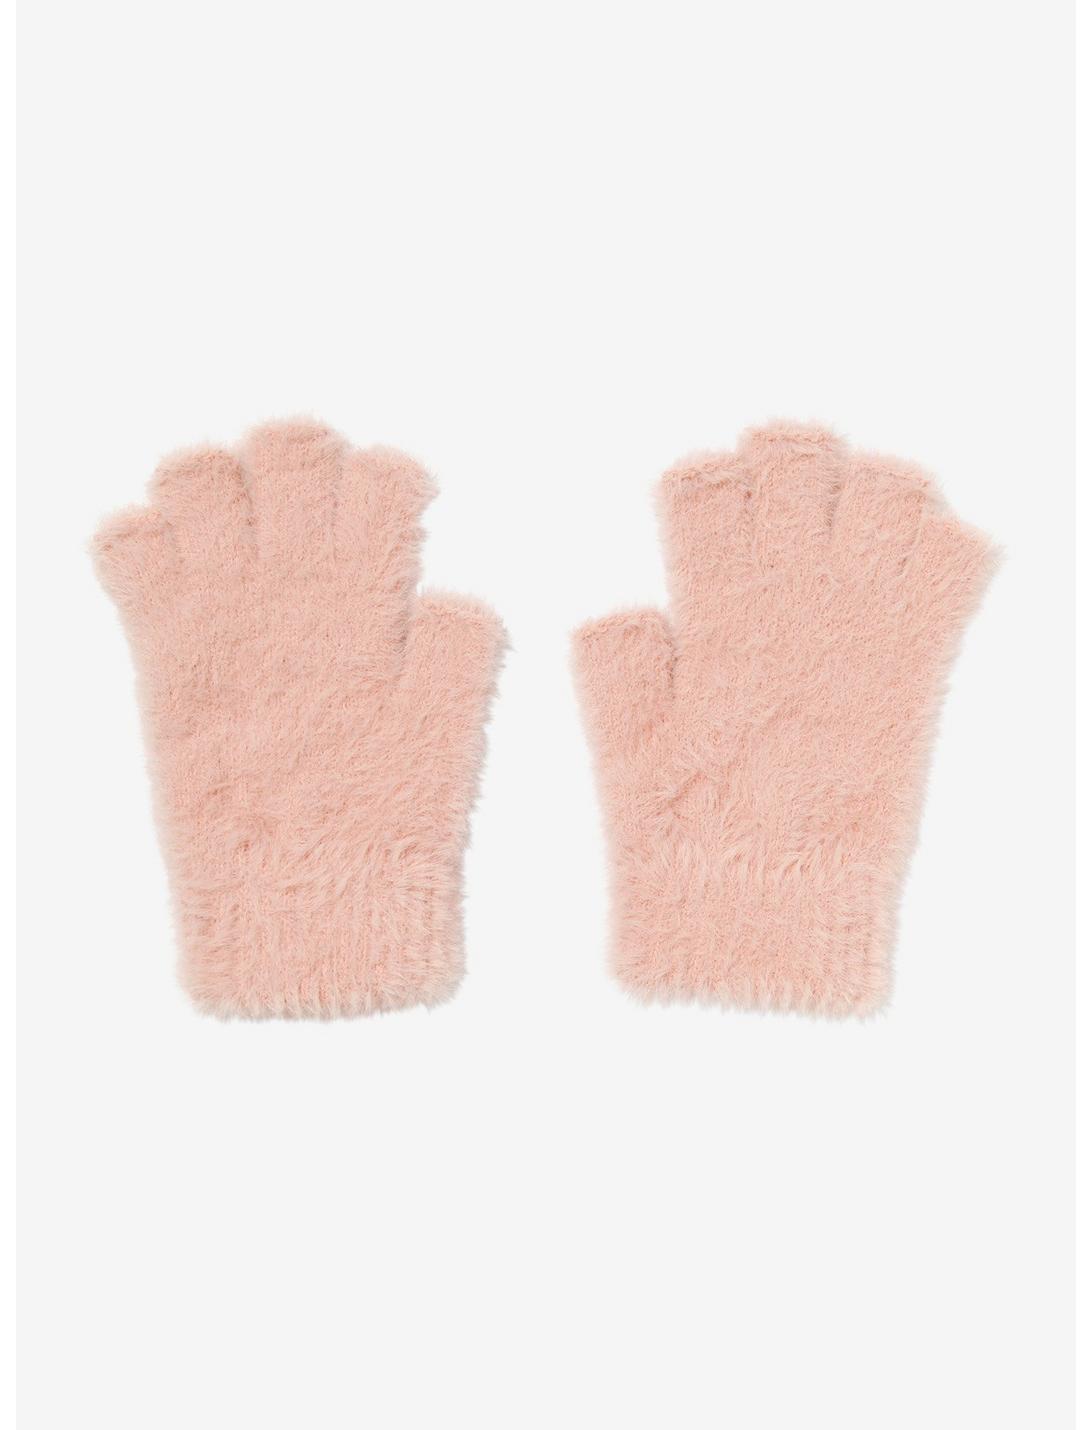 Pink Fuzzy Fingerless Gloves, , hi-res